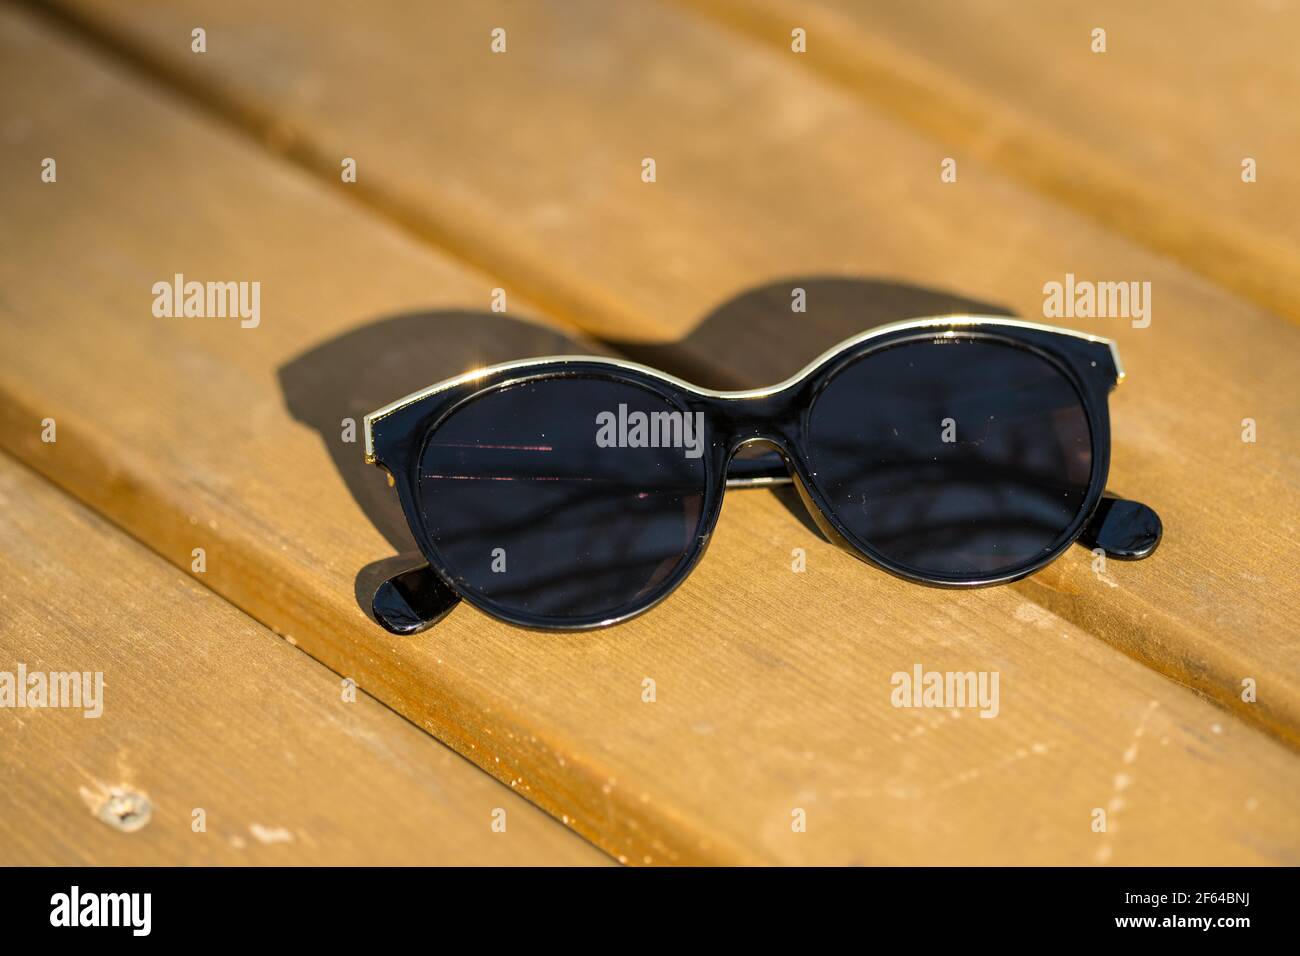 Modelo de de sol de para mujeres con lentes negras redondas grandes y marco negro disparar en día de verano closeup. Enfoque selectivo Fotografía de stock - Alamy